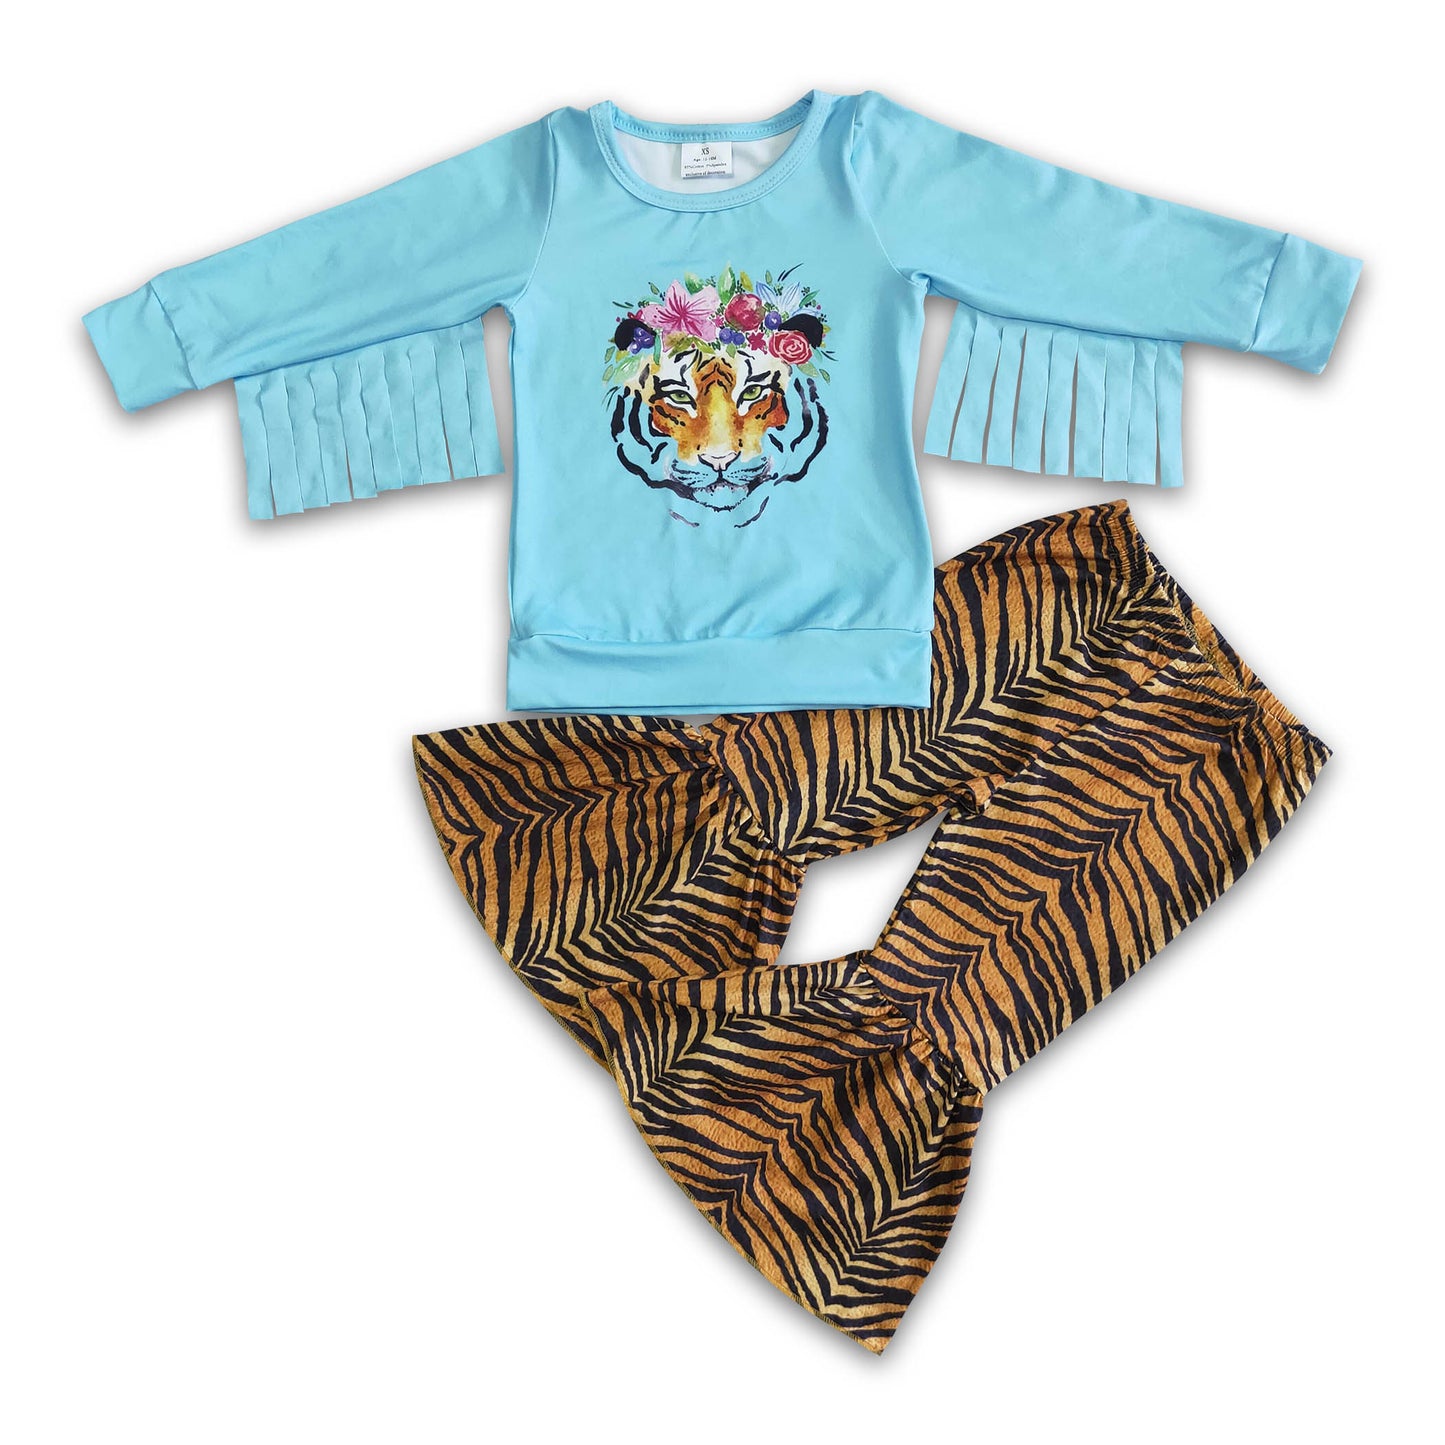 Tiger print tassels long sleeve shirt pants girls clothing set